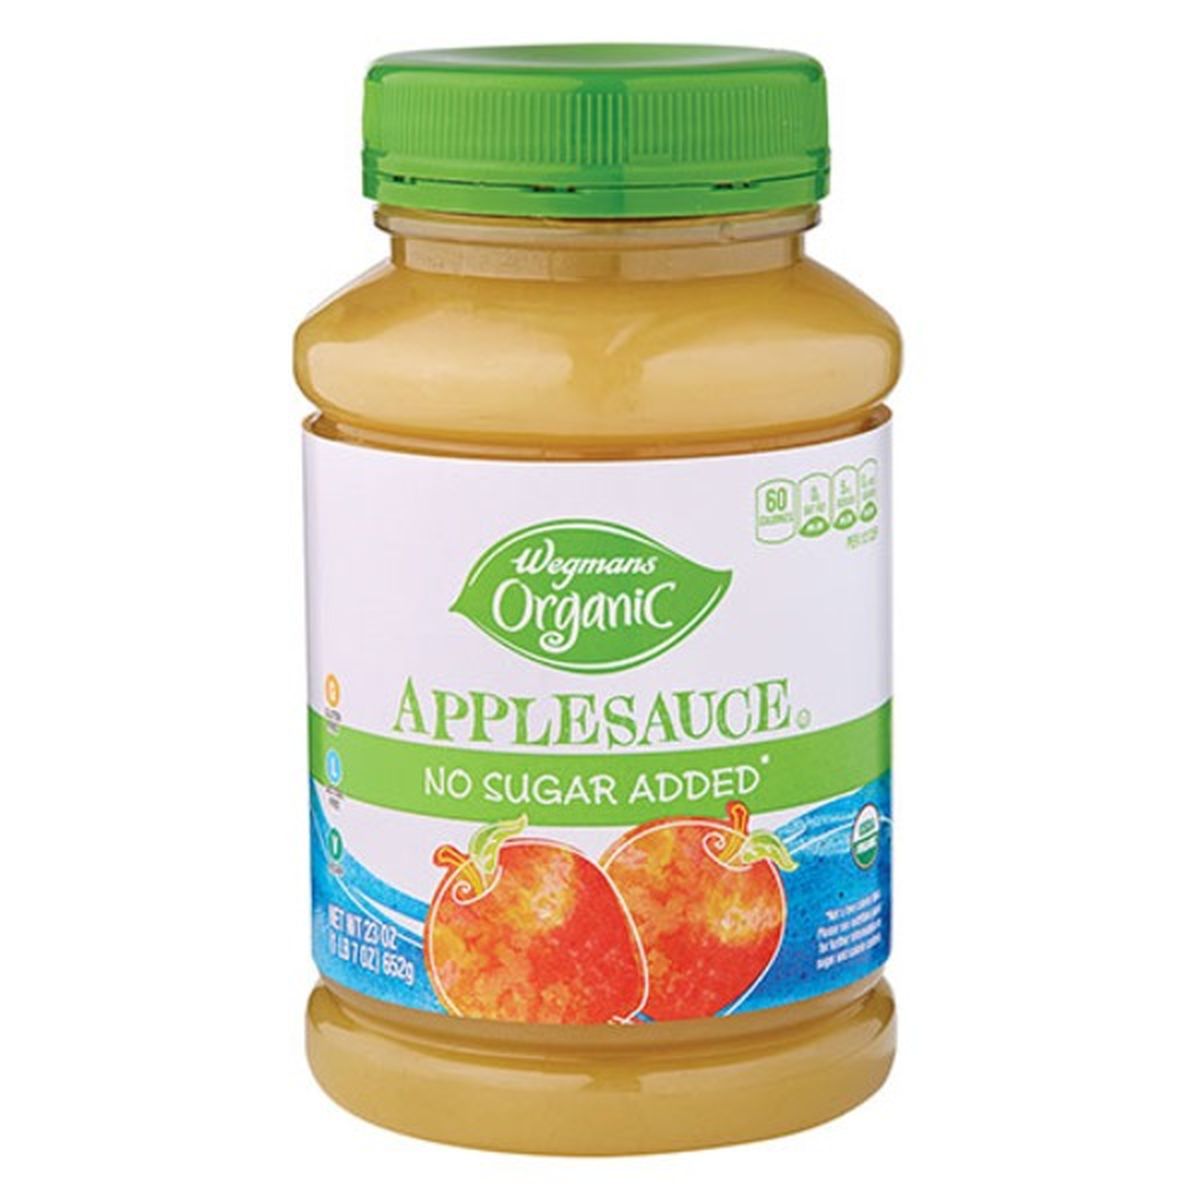 Calories in Wegmans Organic Applesauce, No Sugar Added